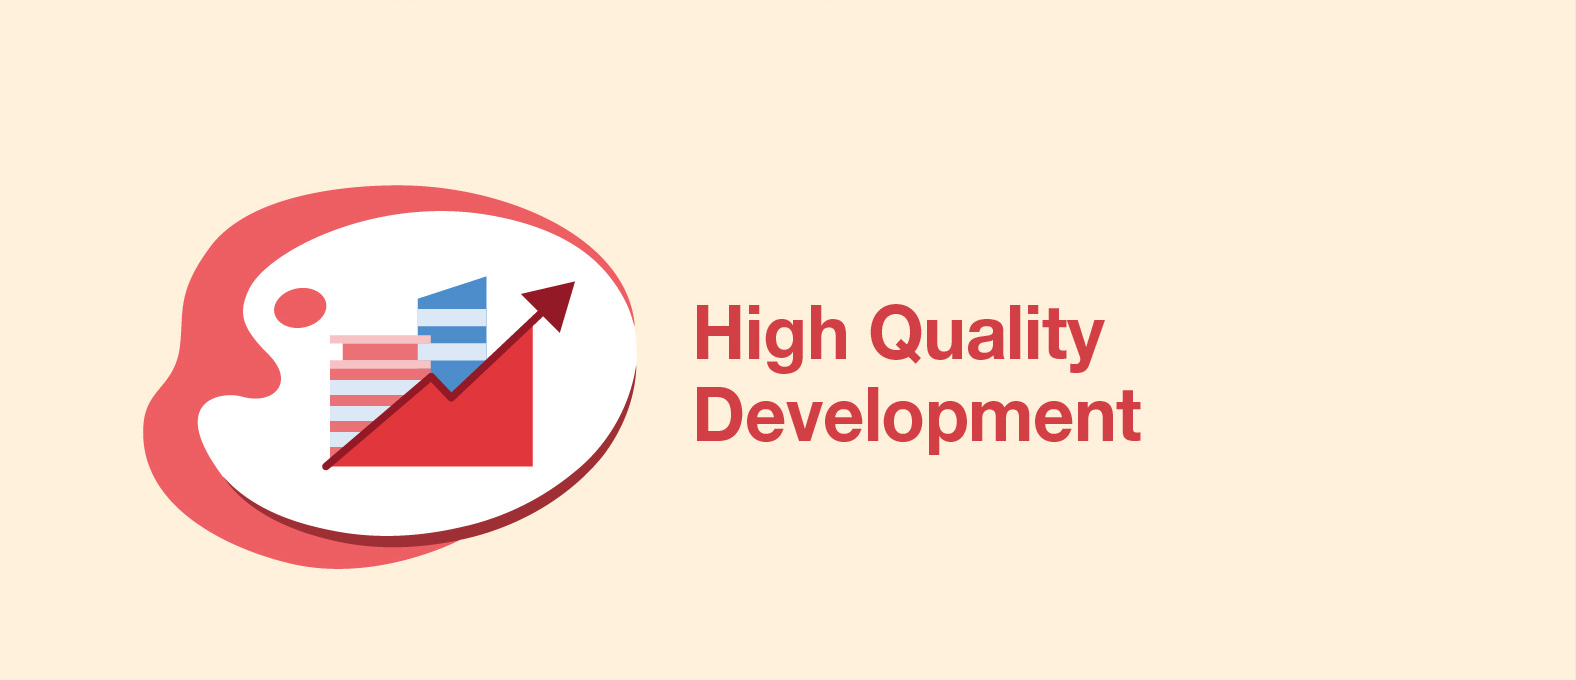 High Quality Development